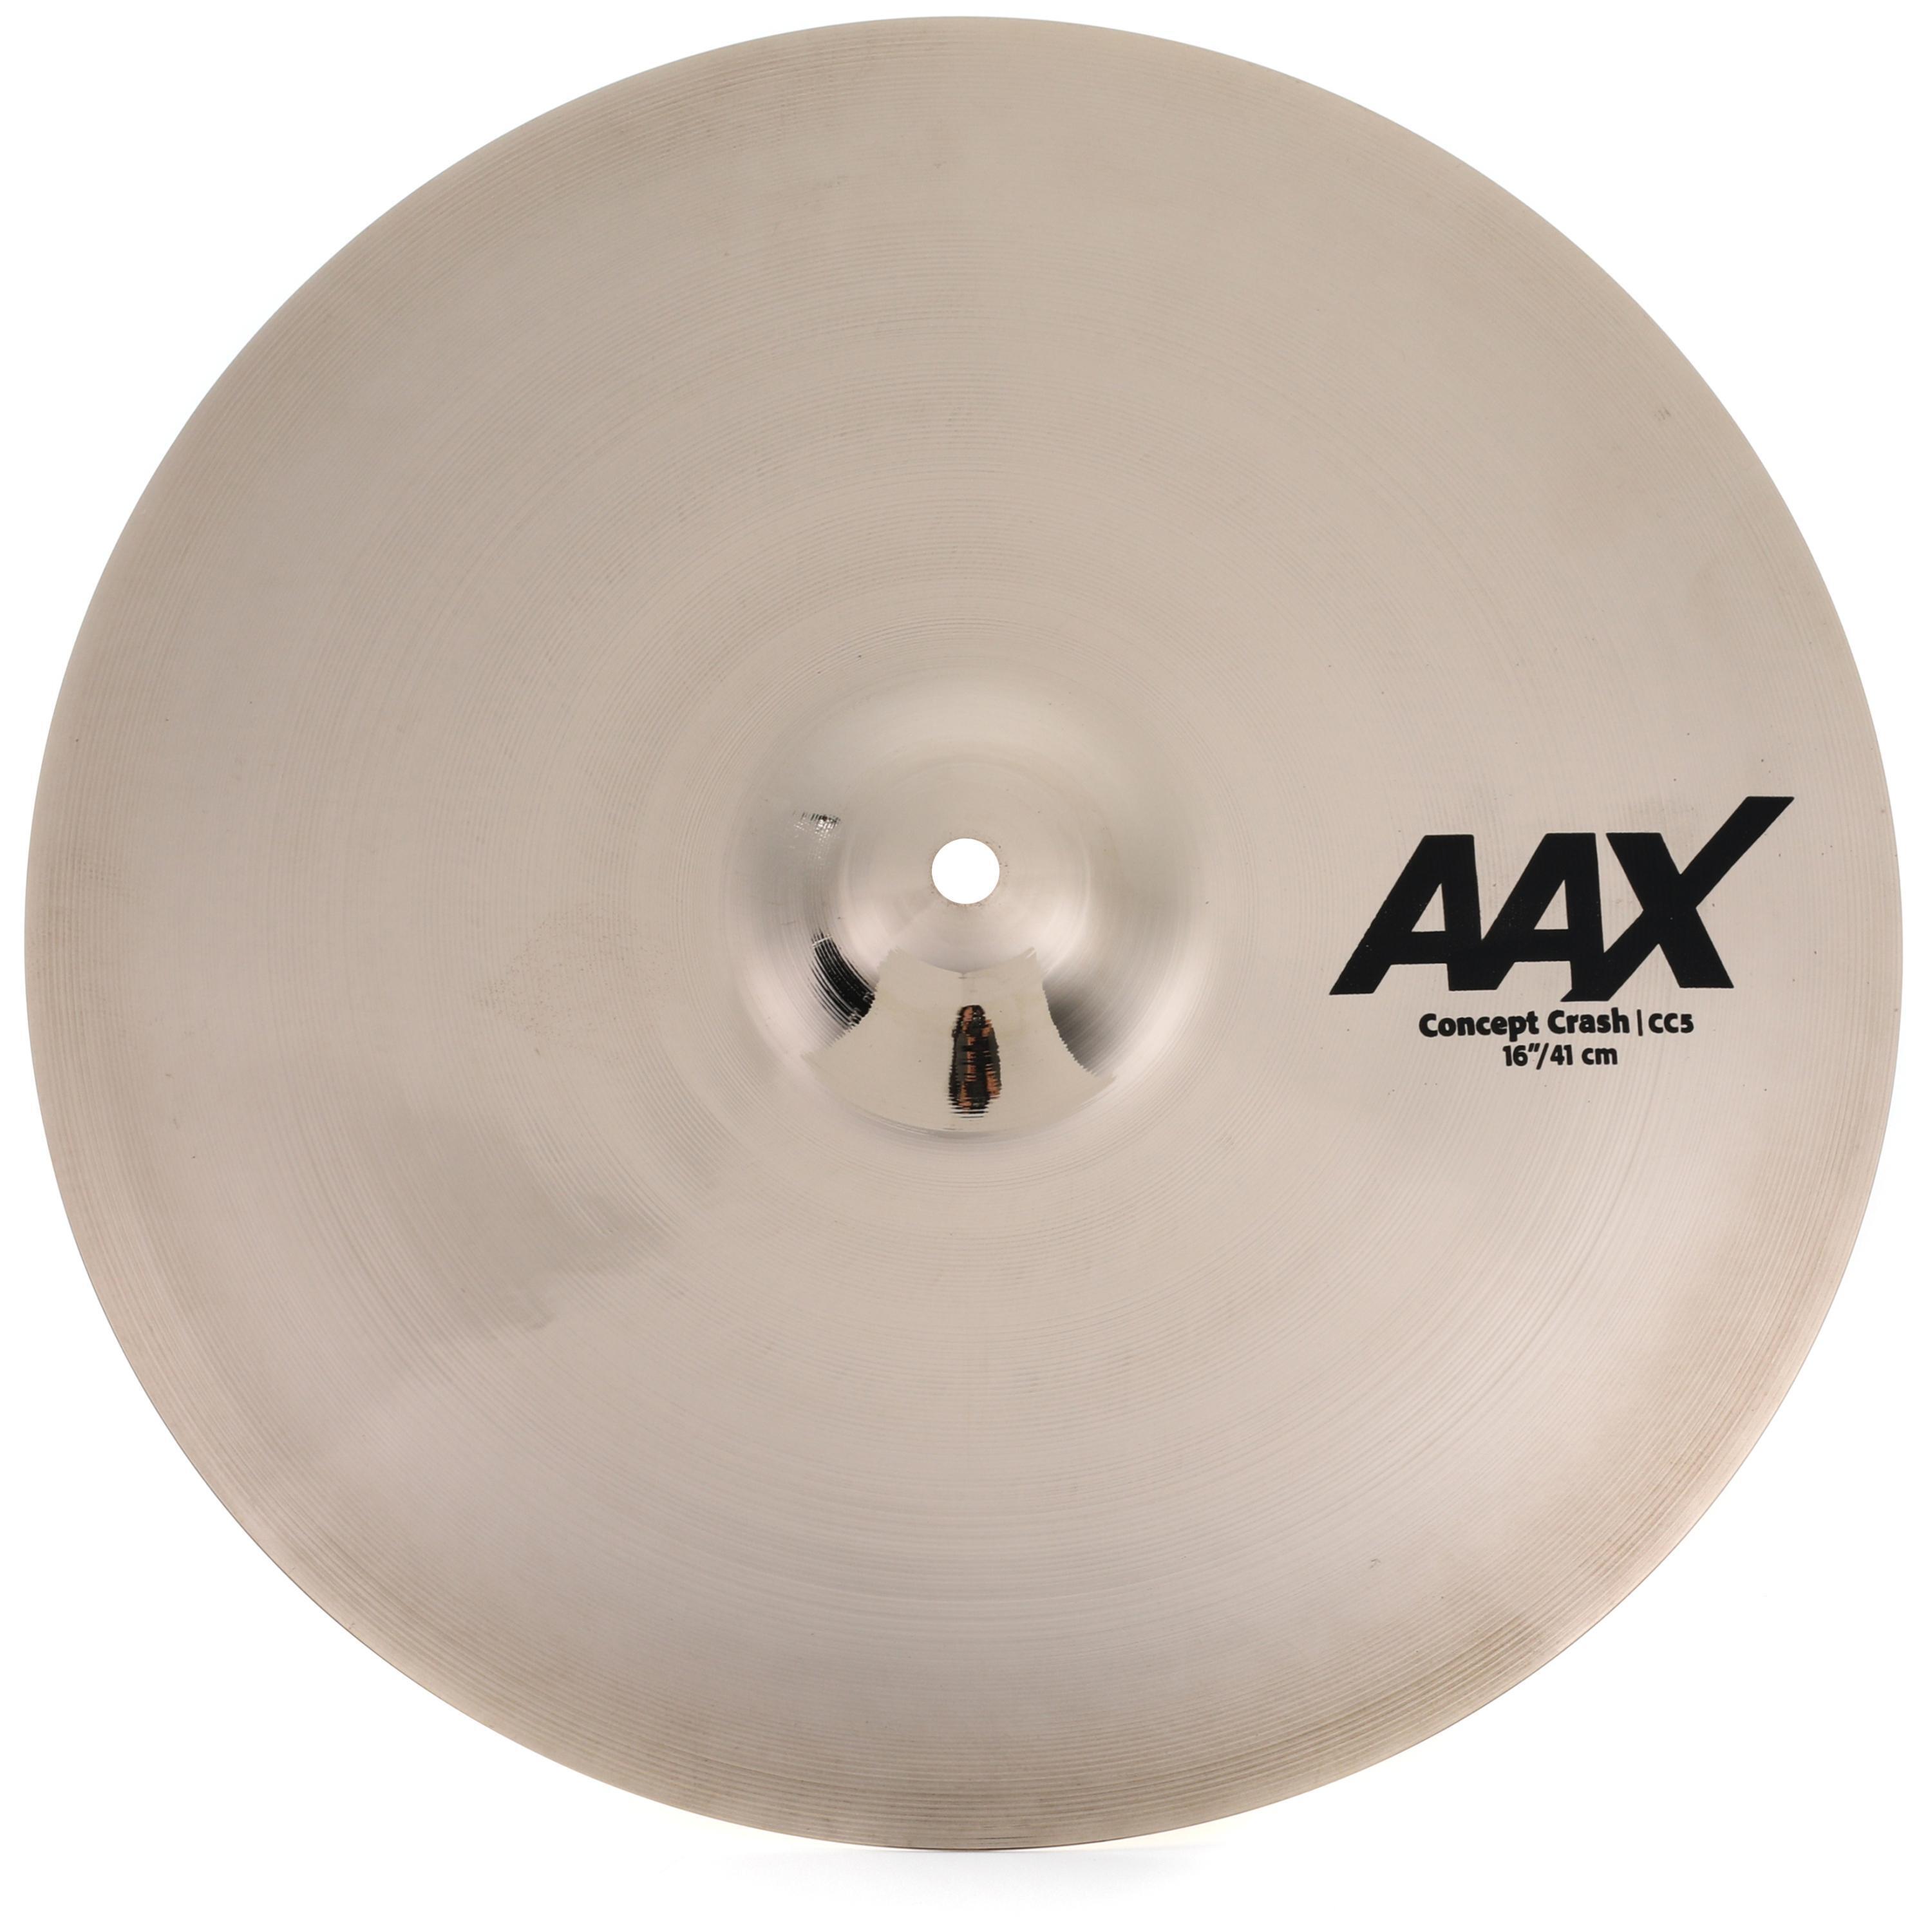 Sabian AAX Concept Crash Cymbal - 16 inch | Sweetwater